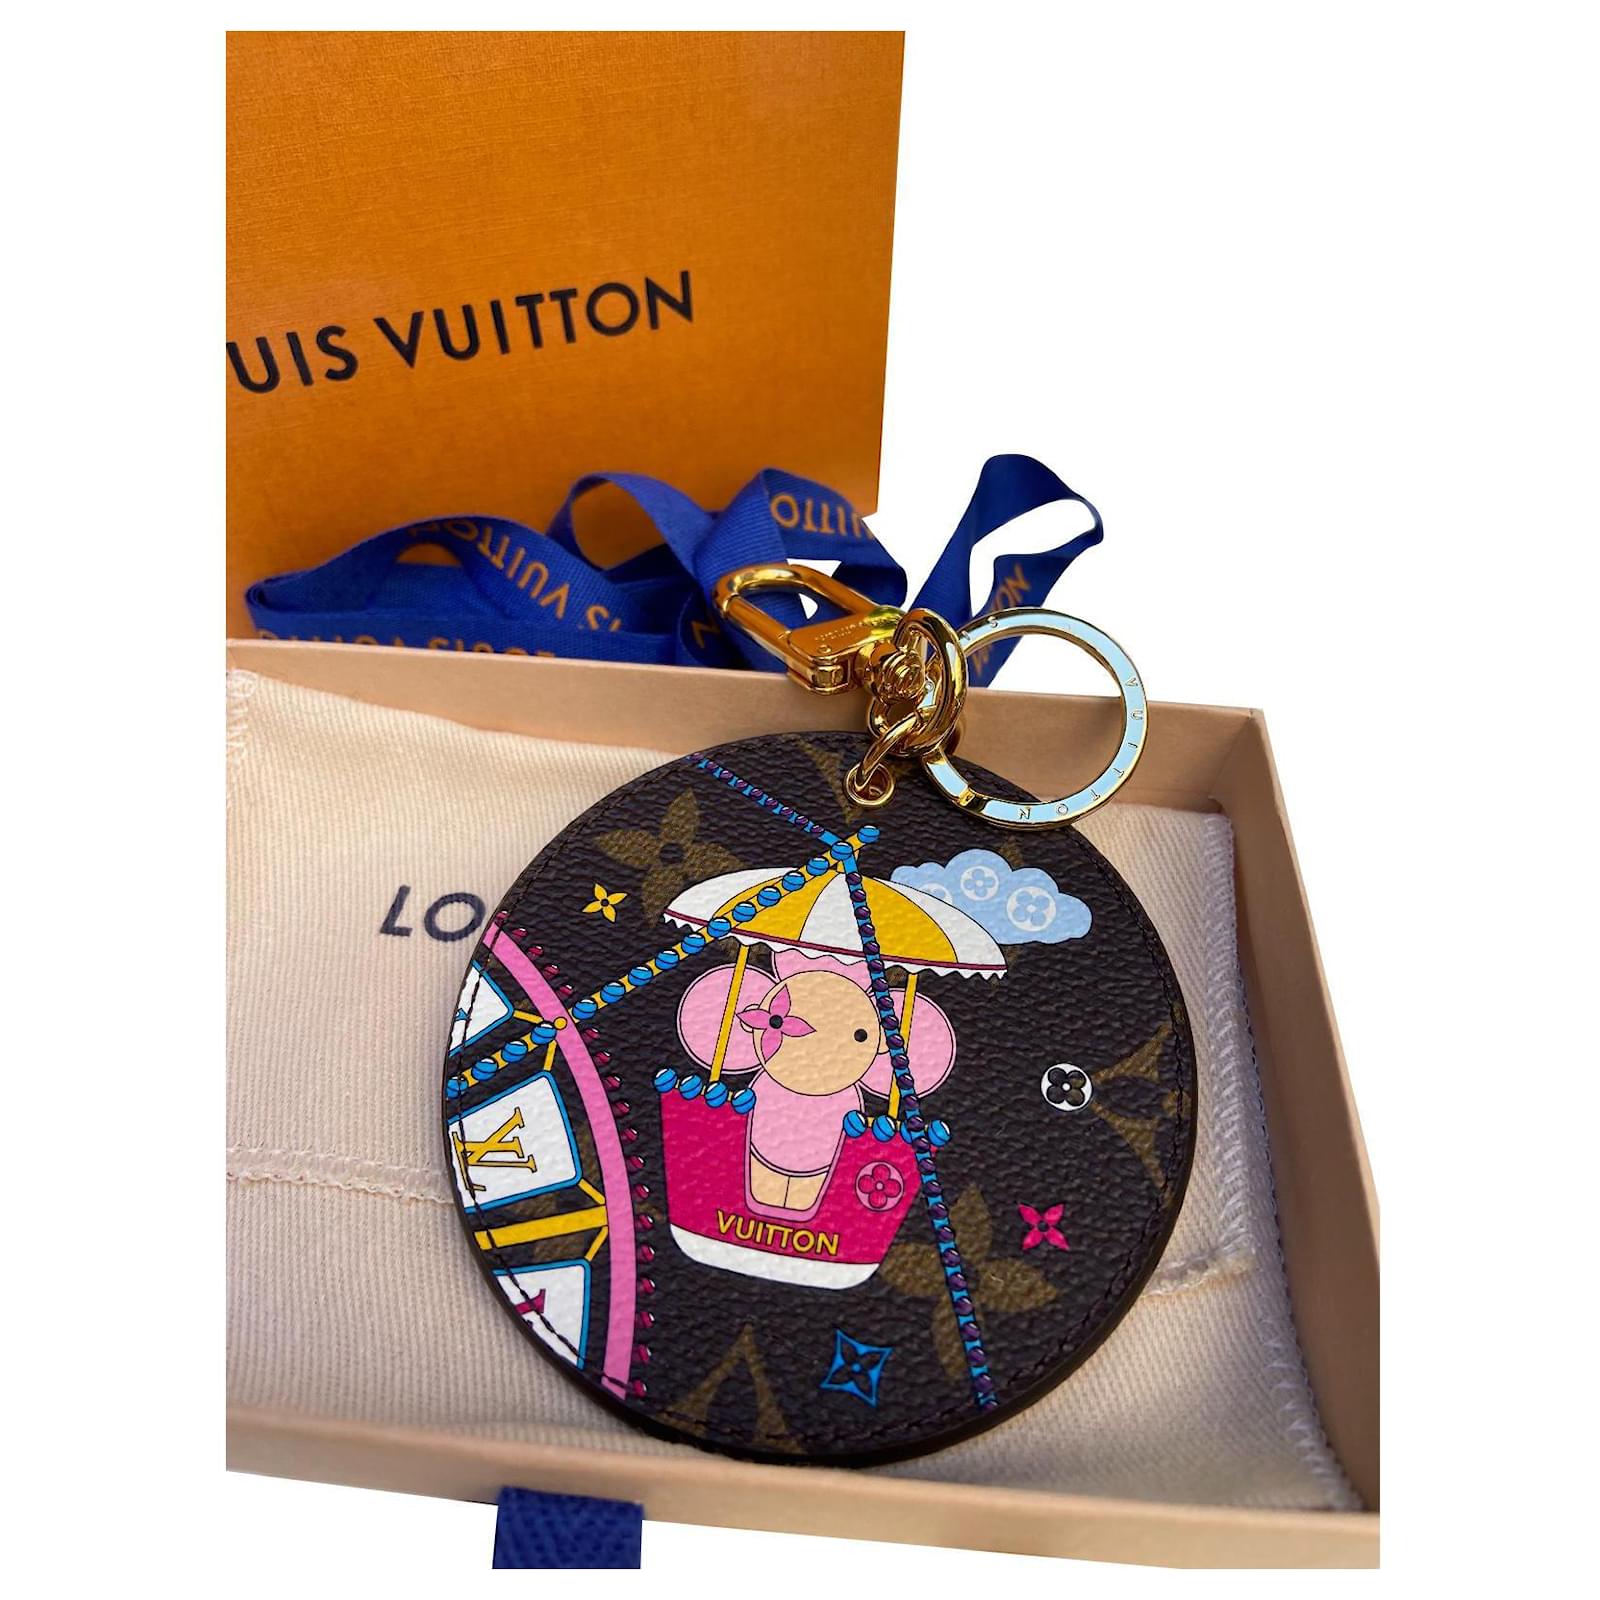 Louis Vuitton Limited Edition Monogram Canvas 2020 Christmas